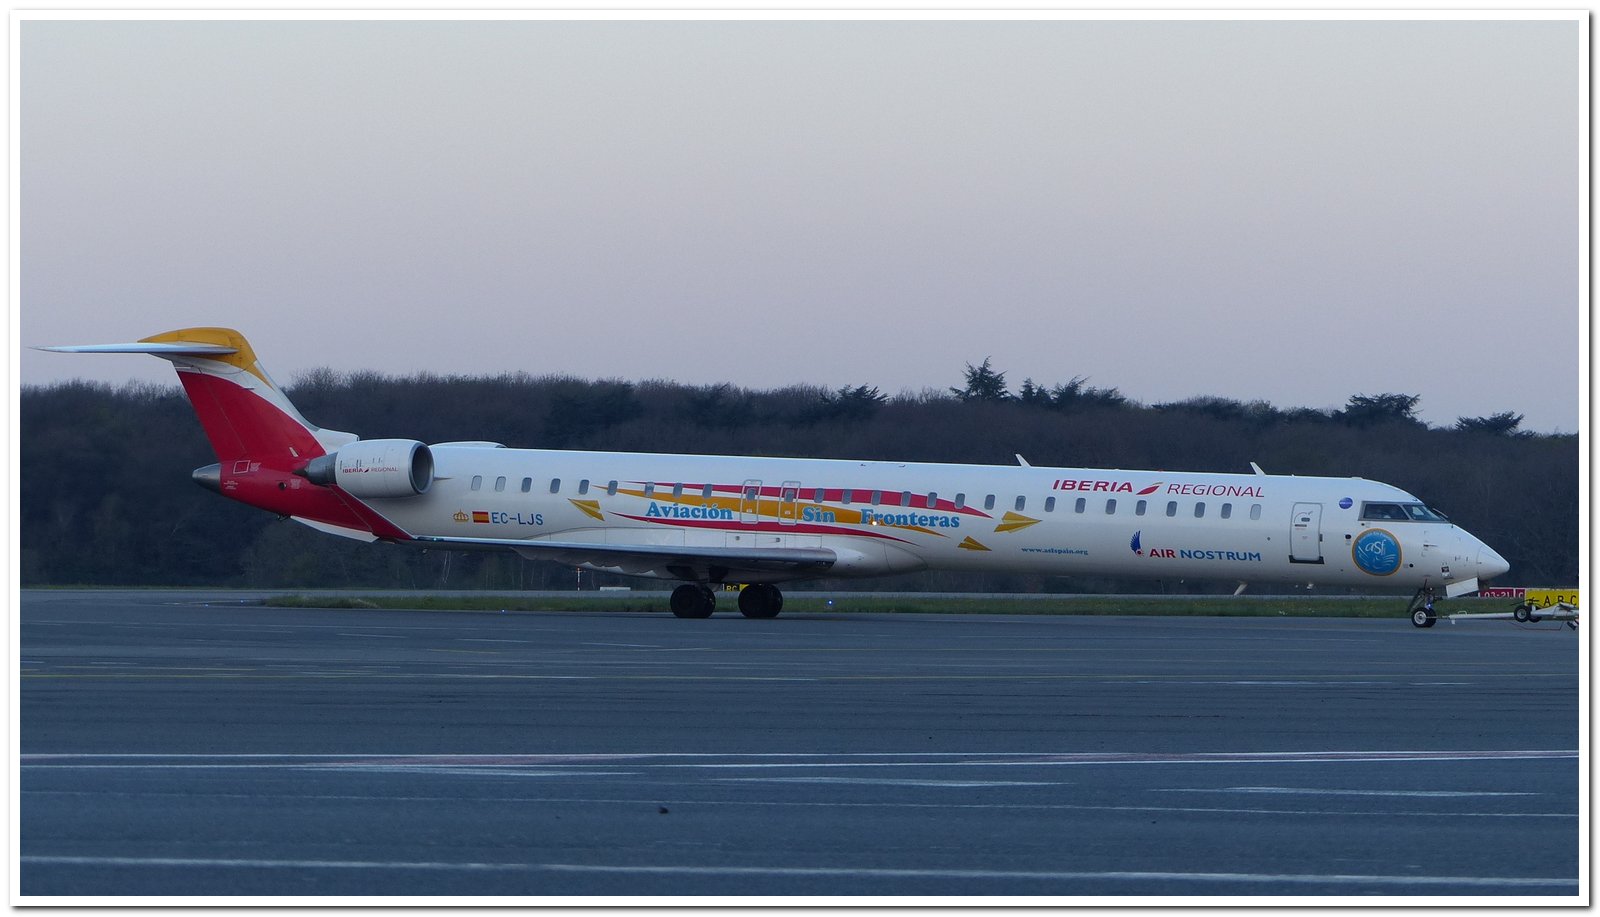  [30/03/2019] CRJ1000 (EC-LJS) Iberia Regional "Aviacion sin fronteras"lencia CF" livery Crj10010